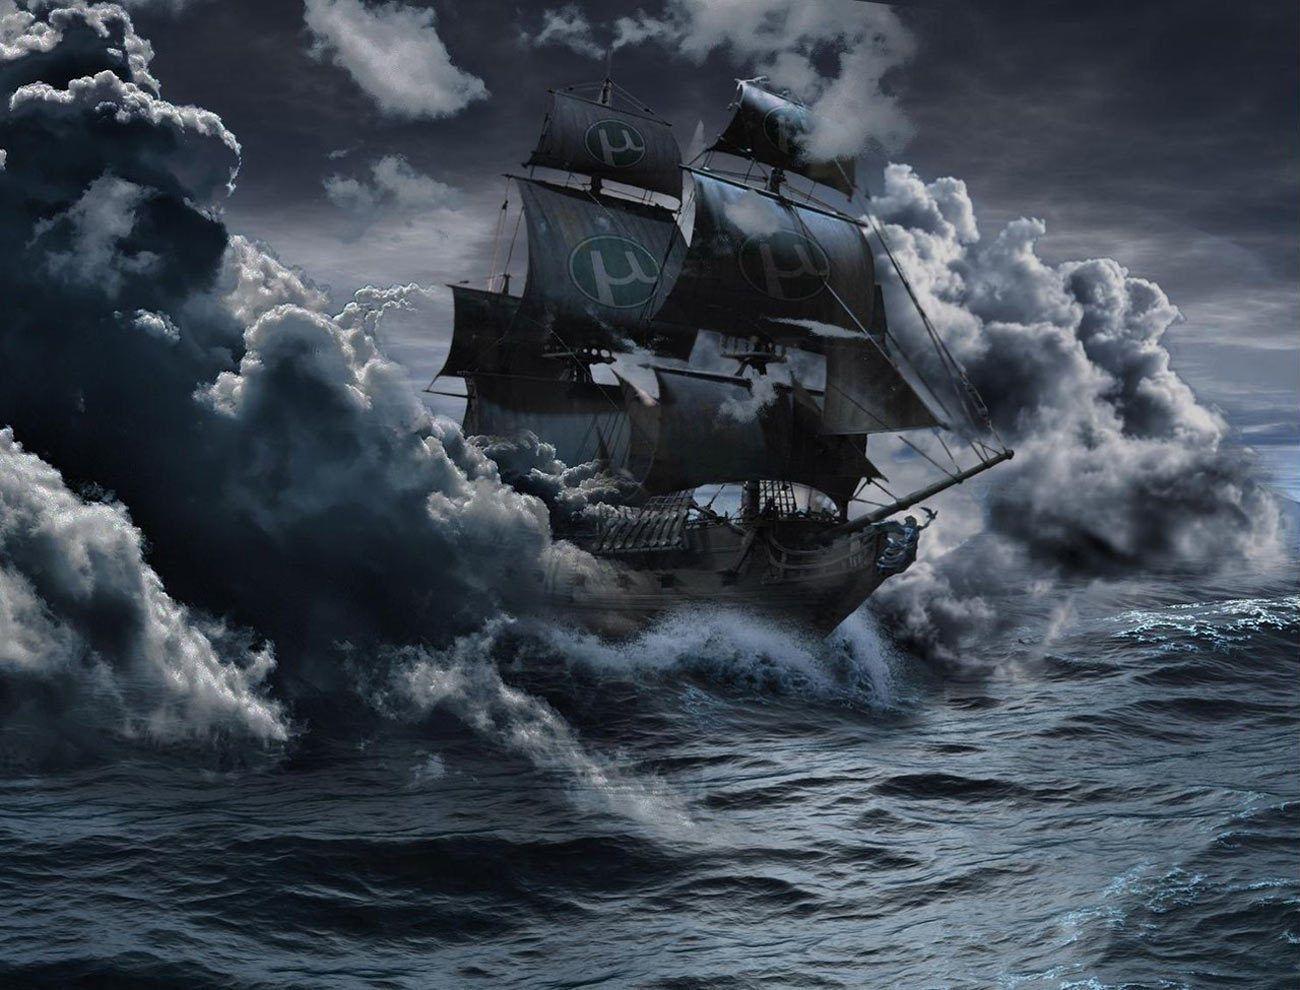 Pirate Ship Wallpaper, Torrent Pirate Ship Wallpaper Free